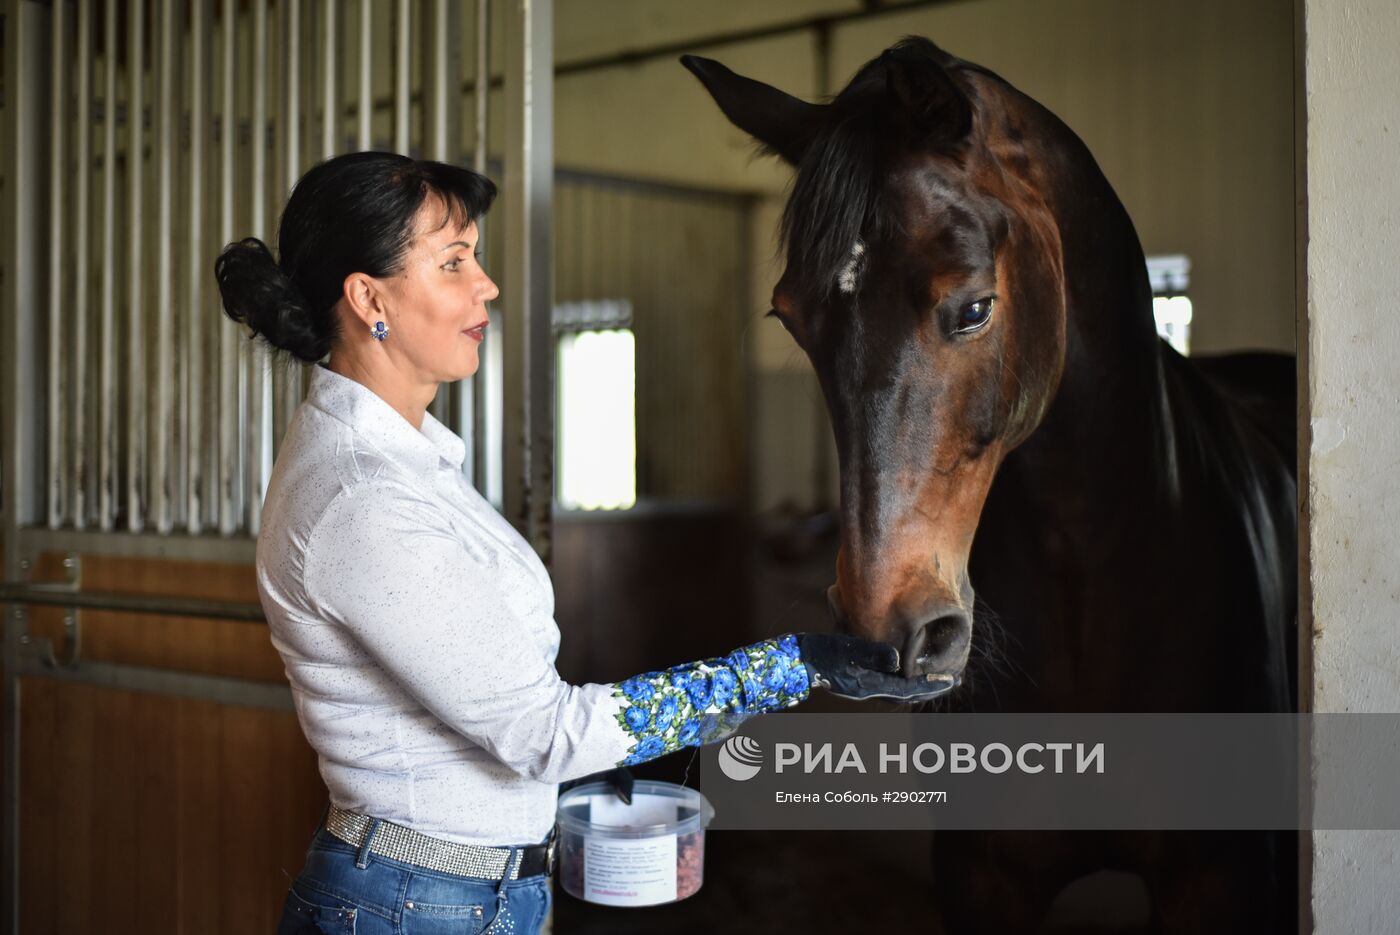 Cборная РФ по конному спорту